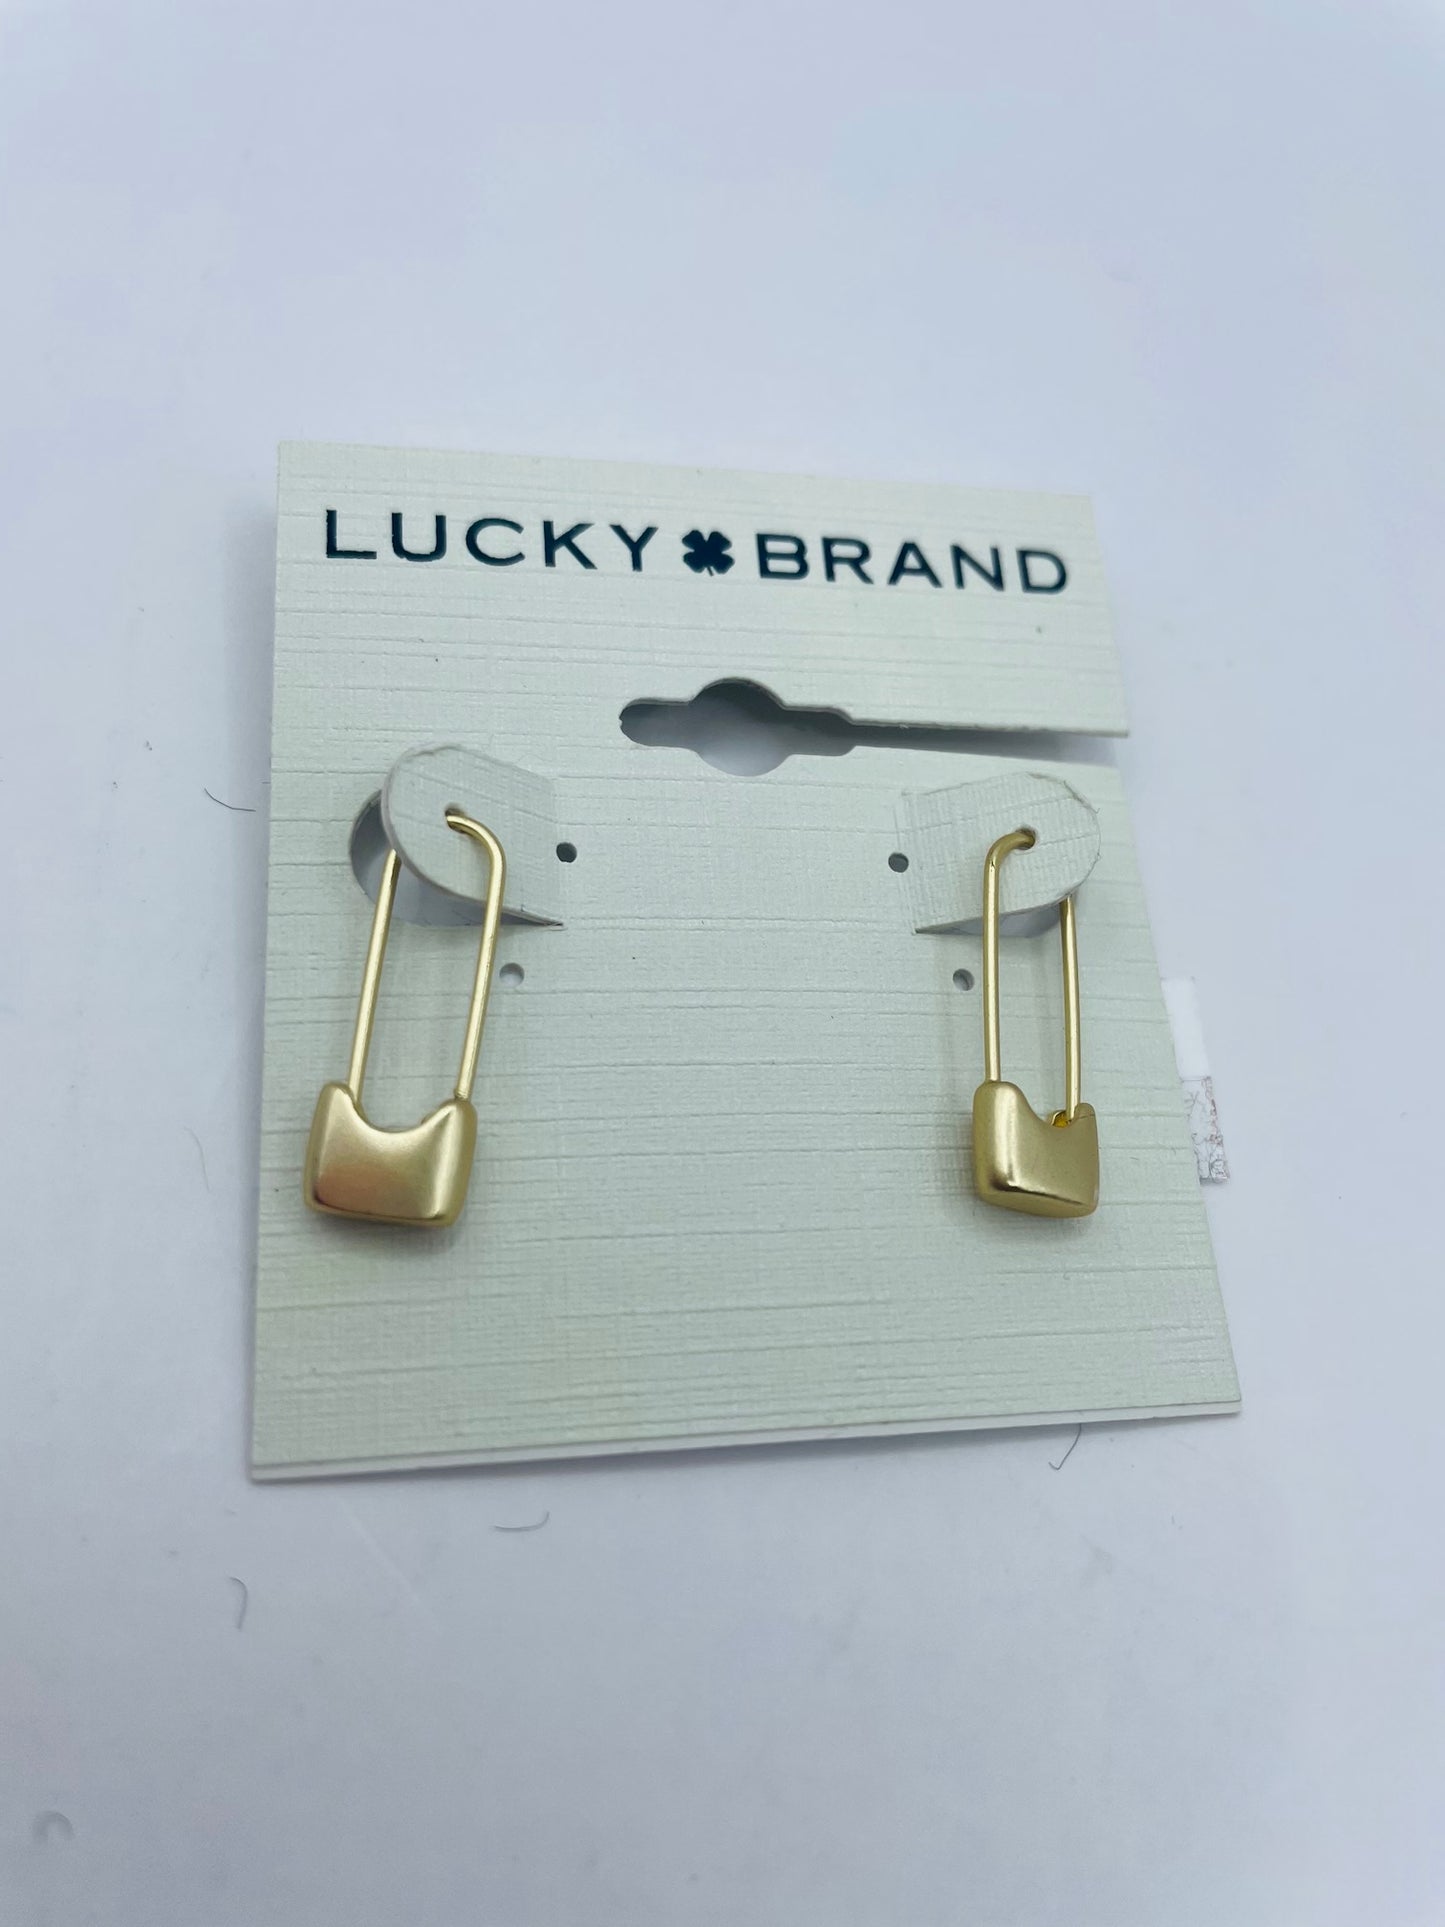 Lucky brand earring